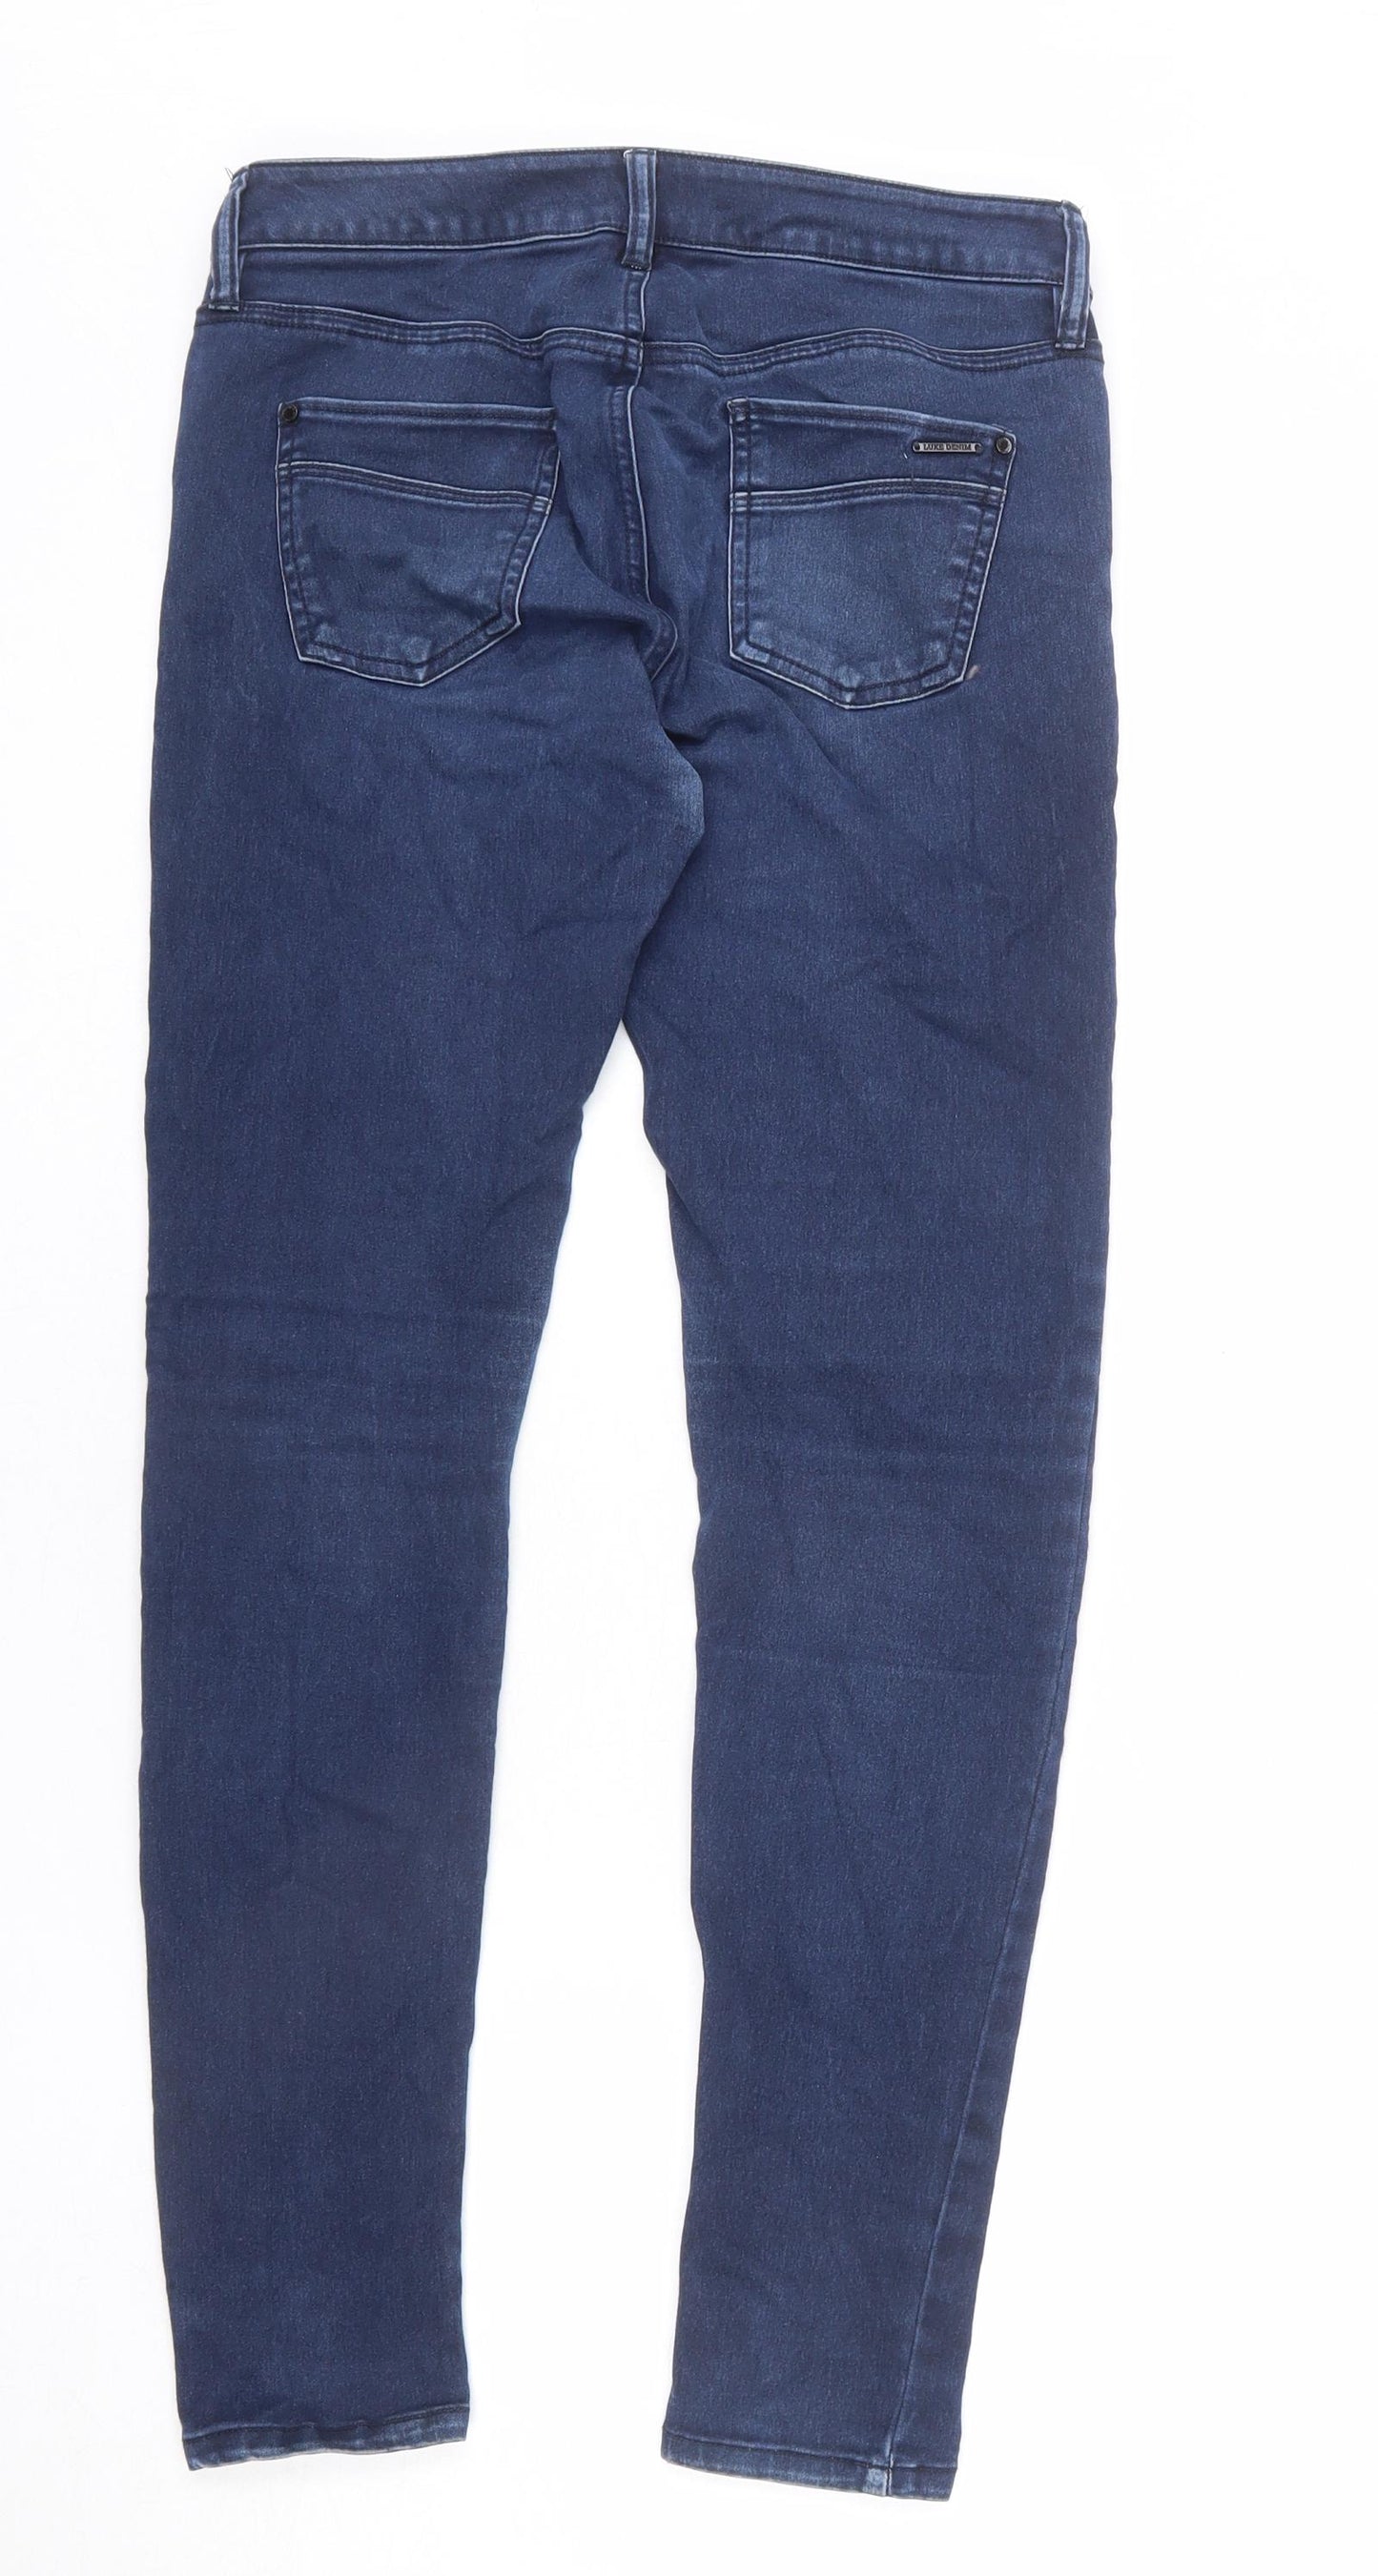 F&F Womens Blue Cotton Skinny Jeans Size 10 L28 in Regular Zip